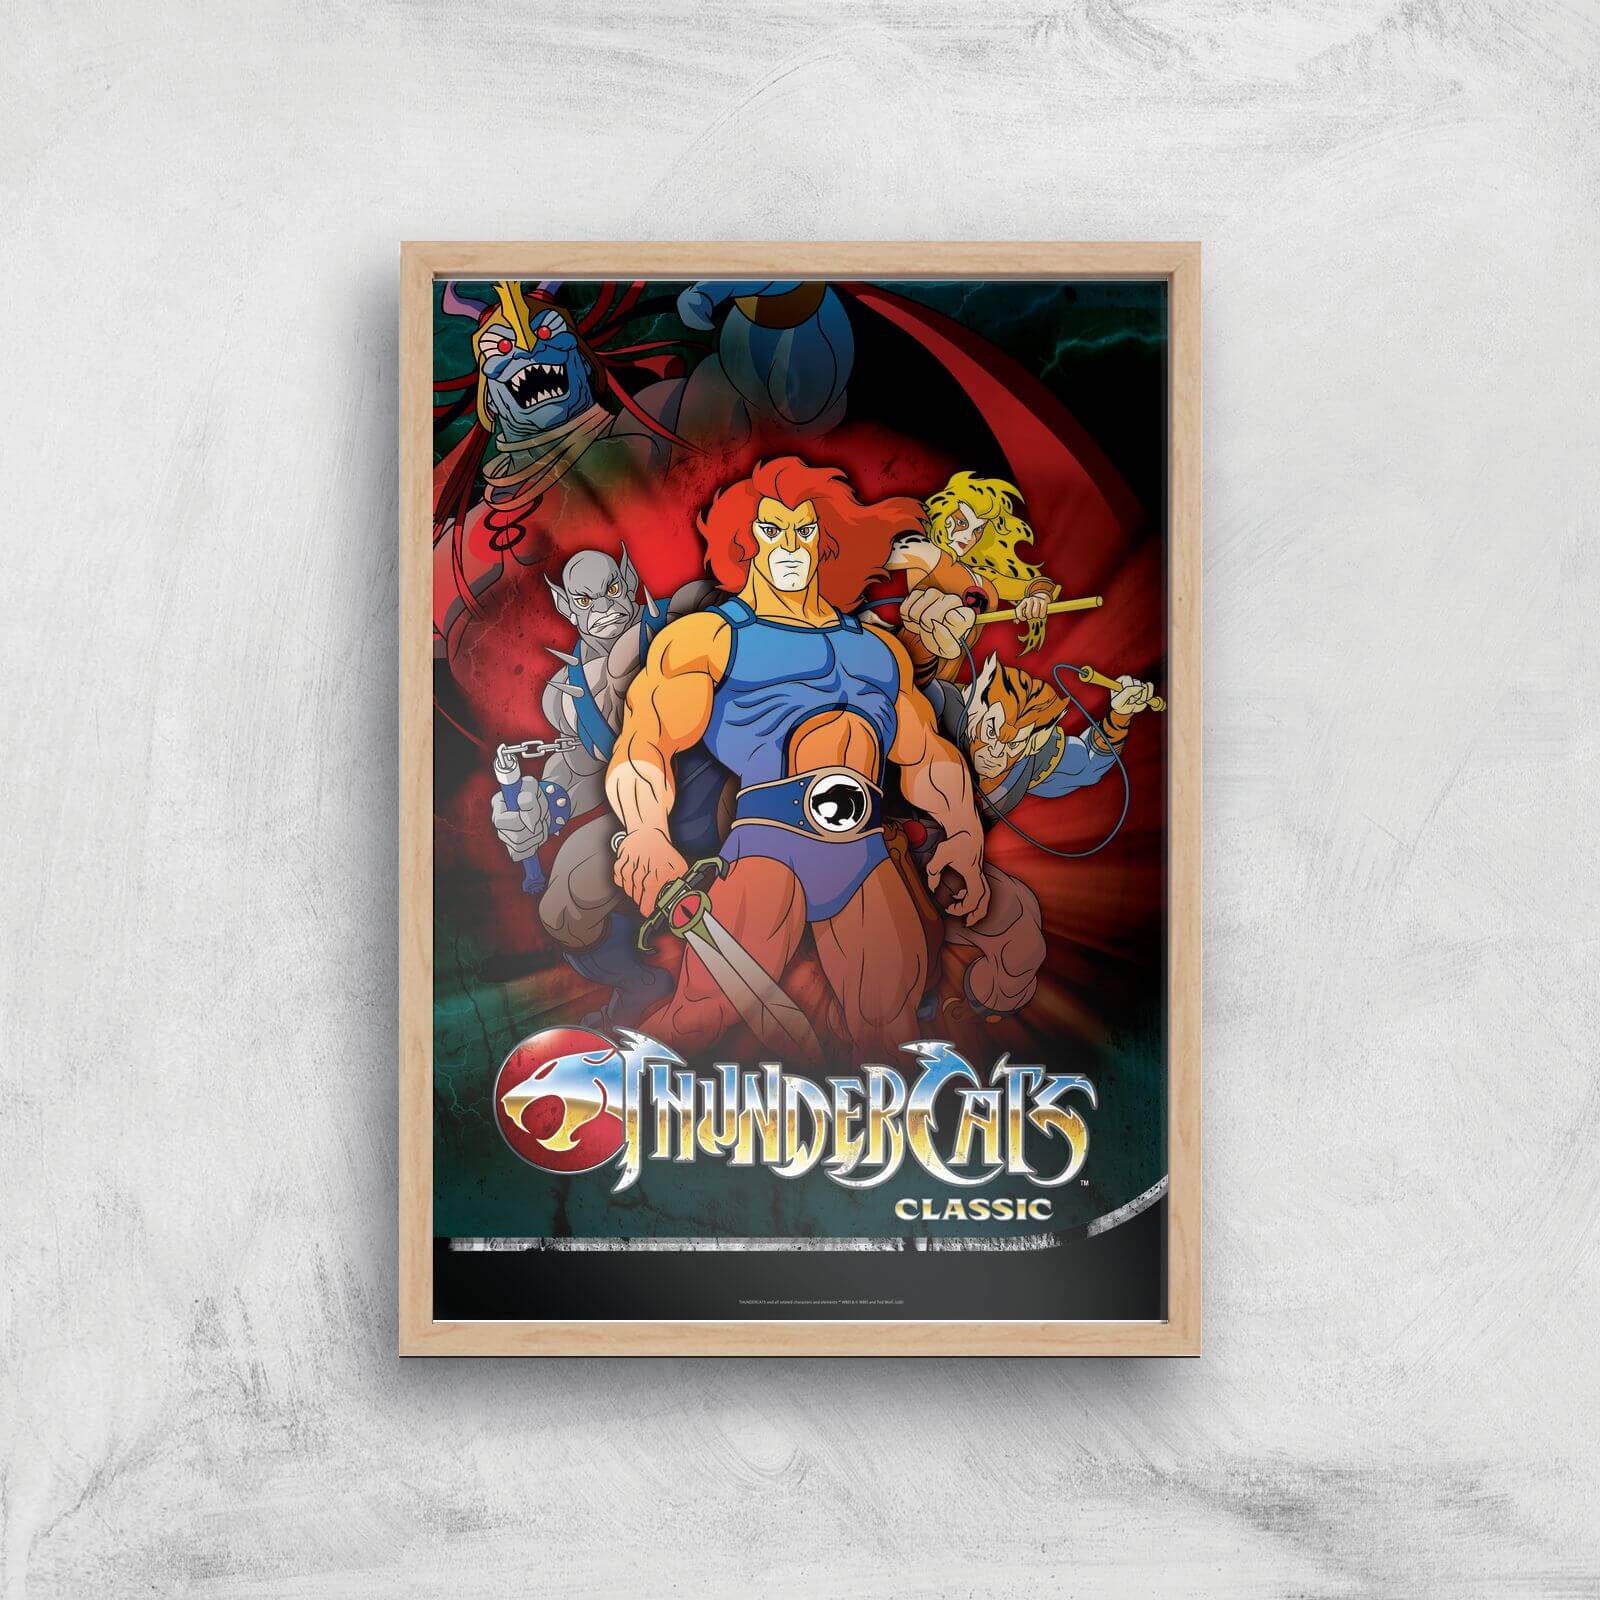 Thundercats Giclee Art Print - A3 - Wooden Frame